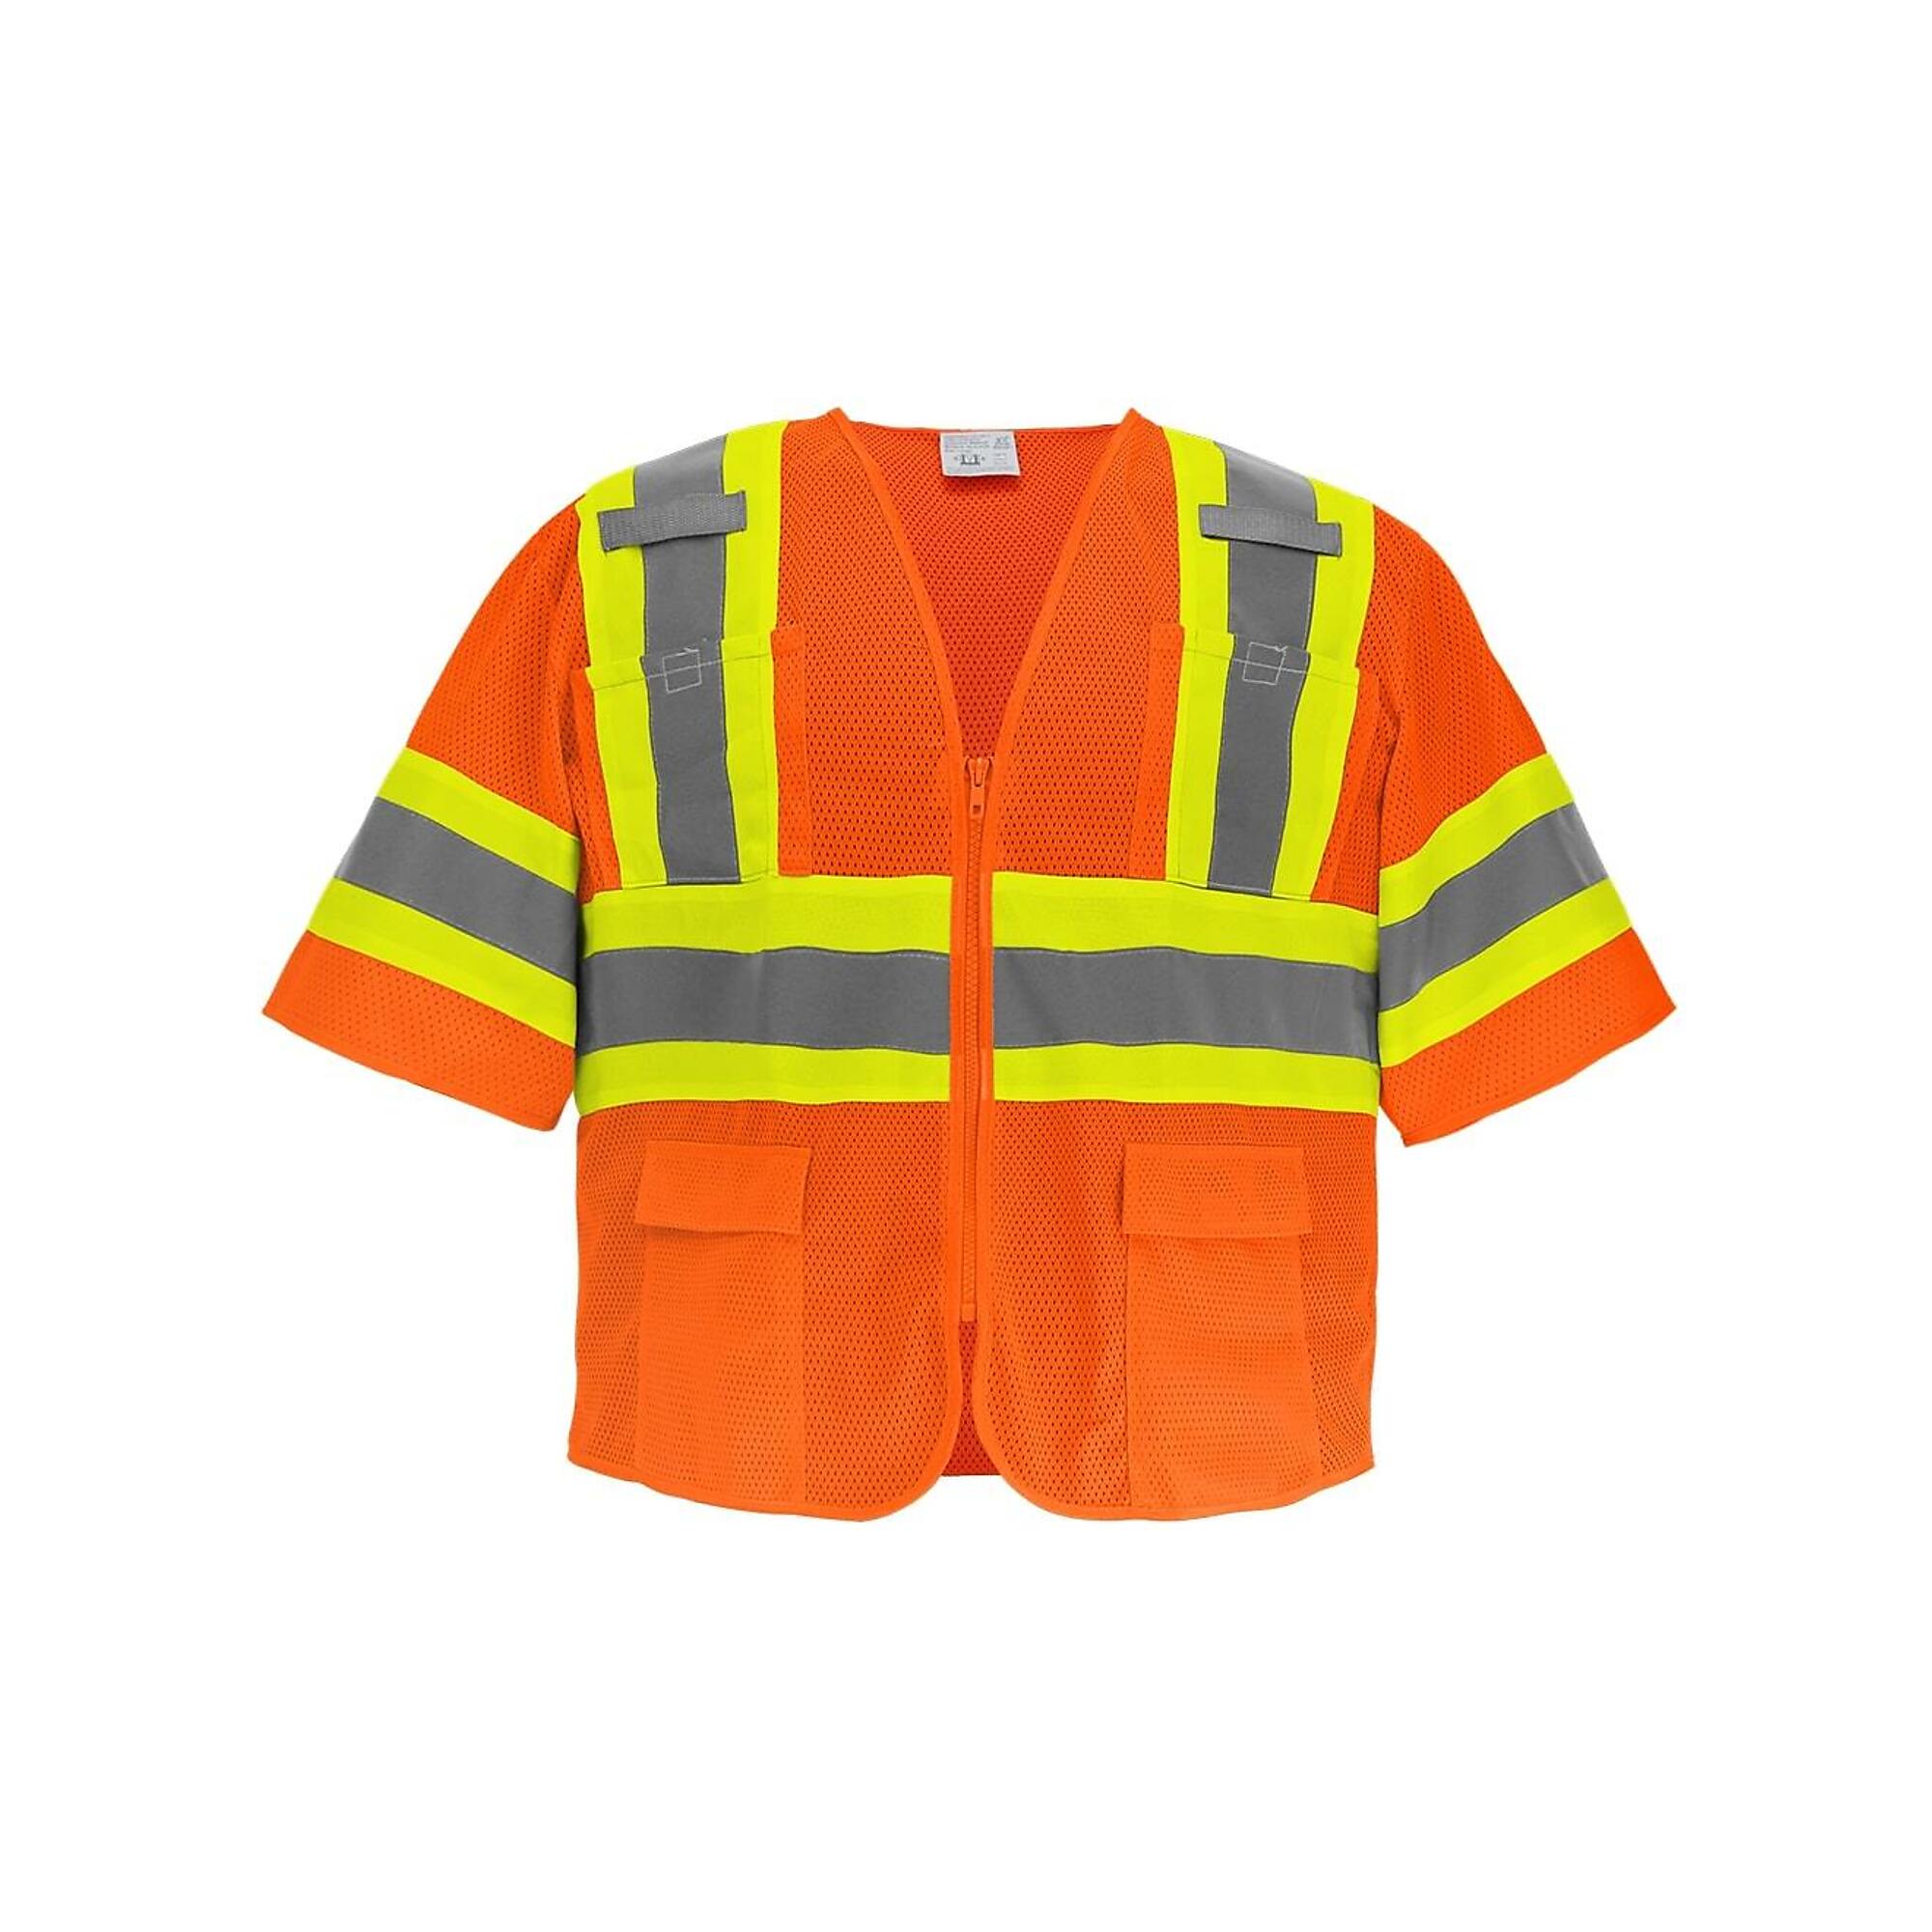 FrogWear, HV Orange, Class 3 6 Pockets, With Sleeves Mesh Vest, Size M, Color High-Visibility Orange, Model GLO-0145-M